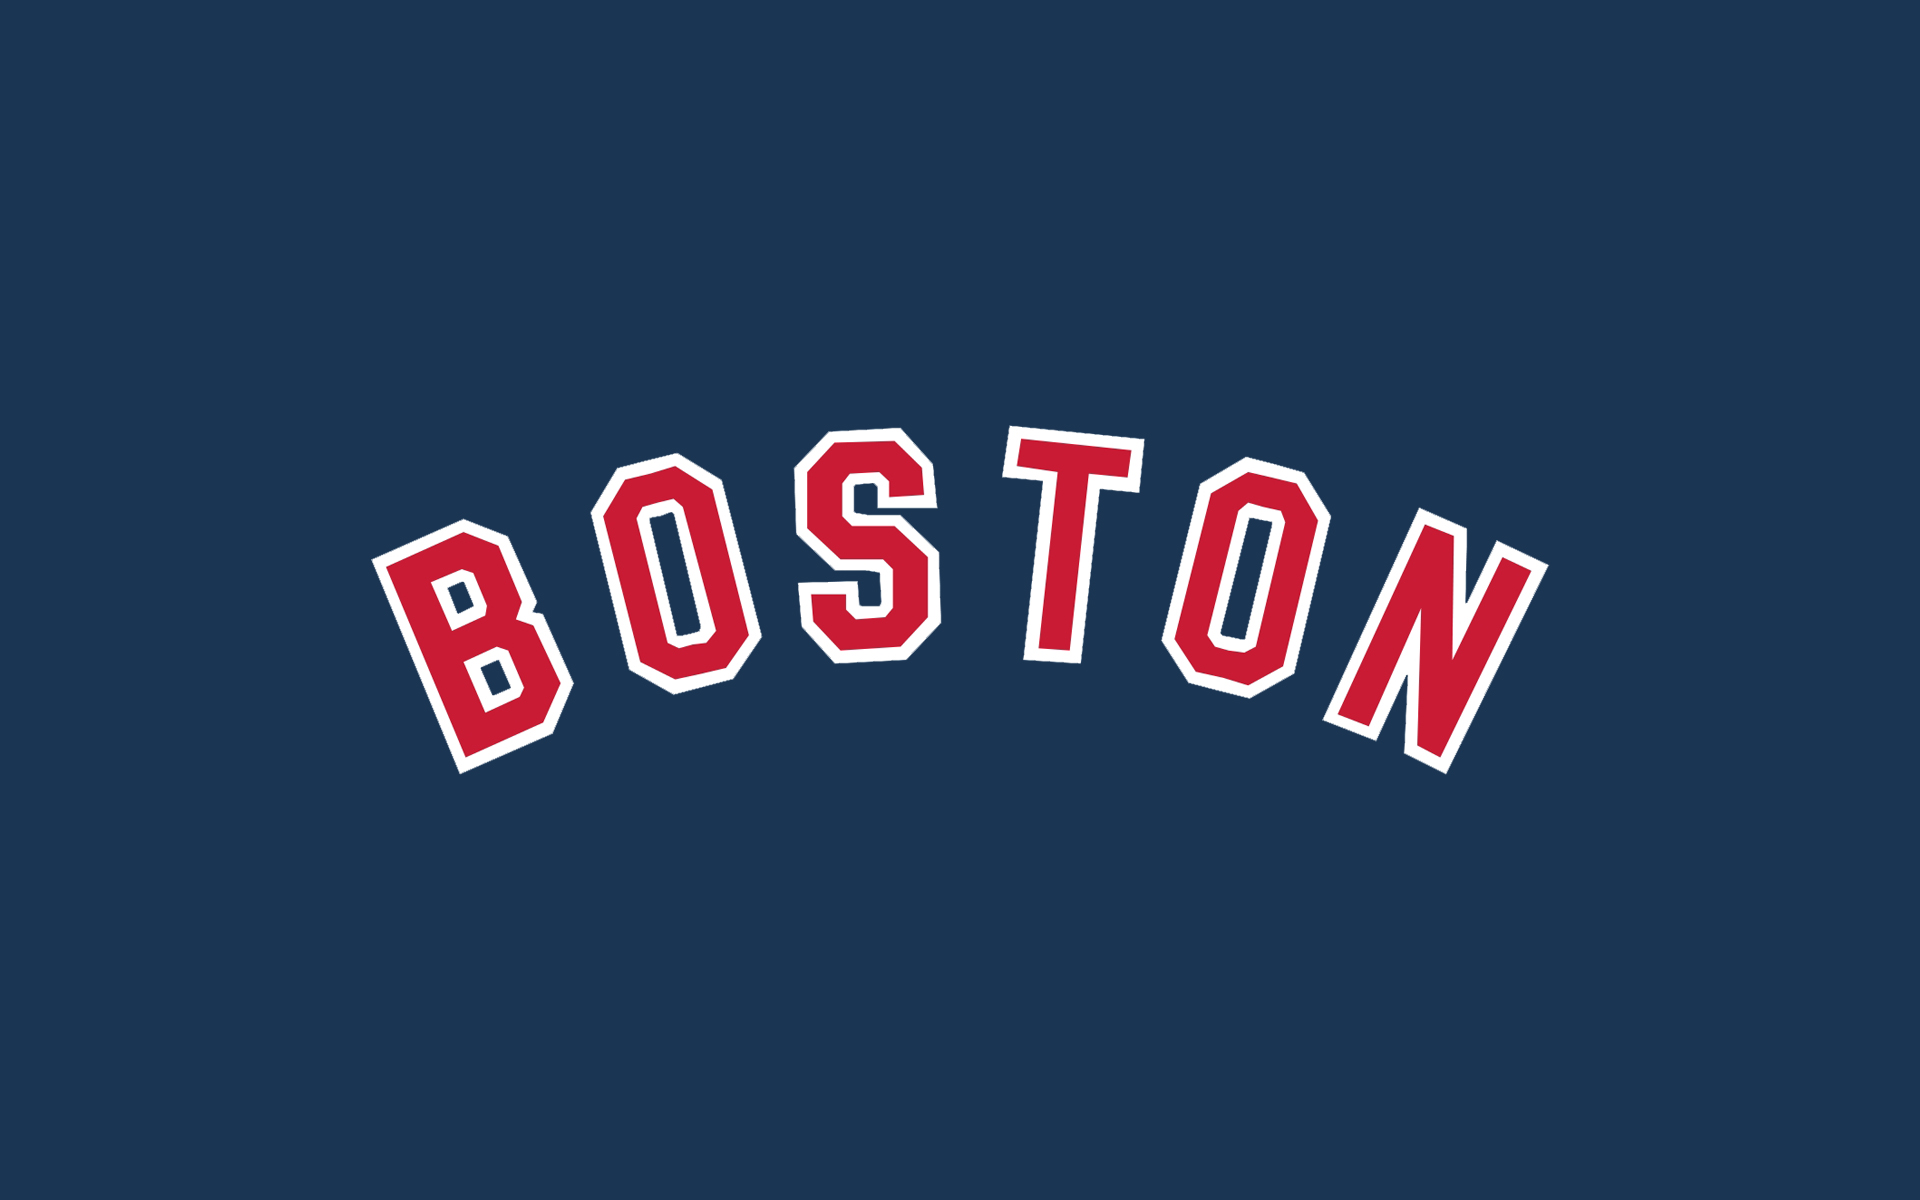 free boston red sox logo wallpaper 6jpg 1920x1200